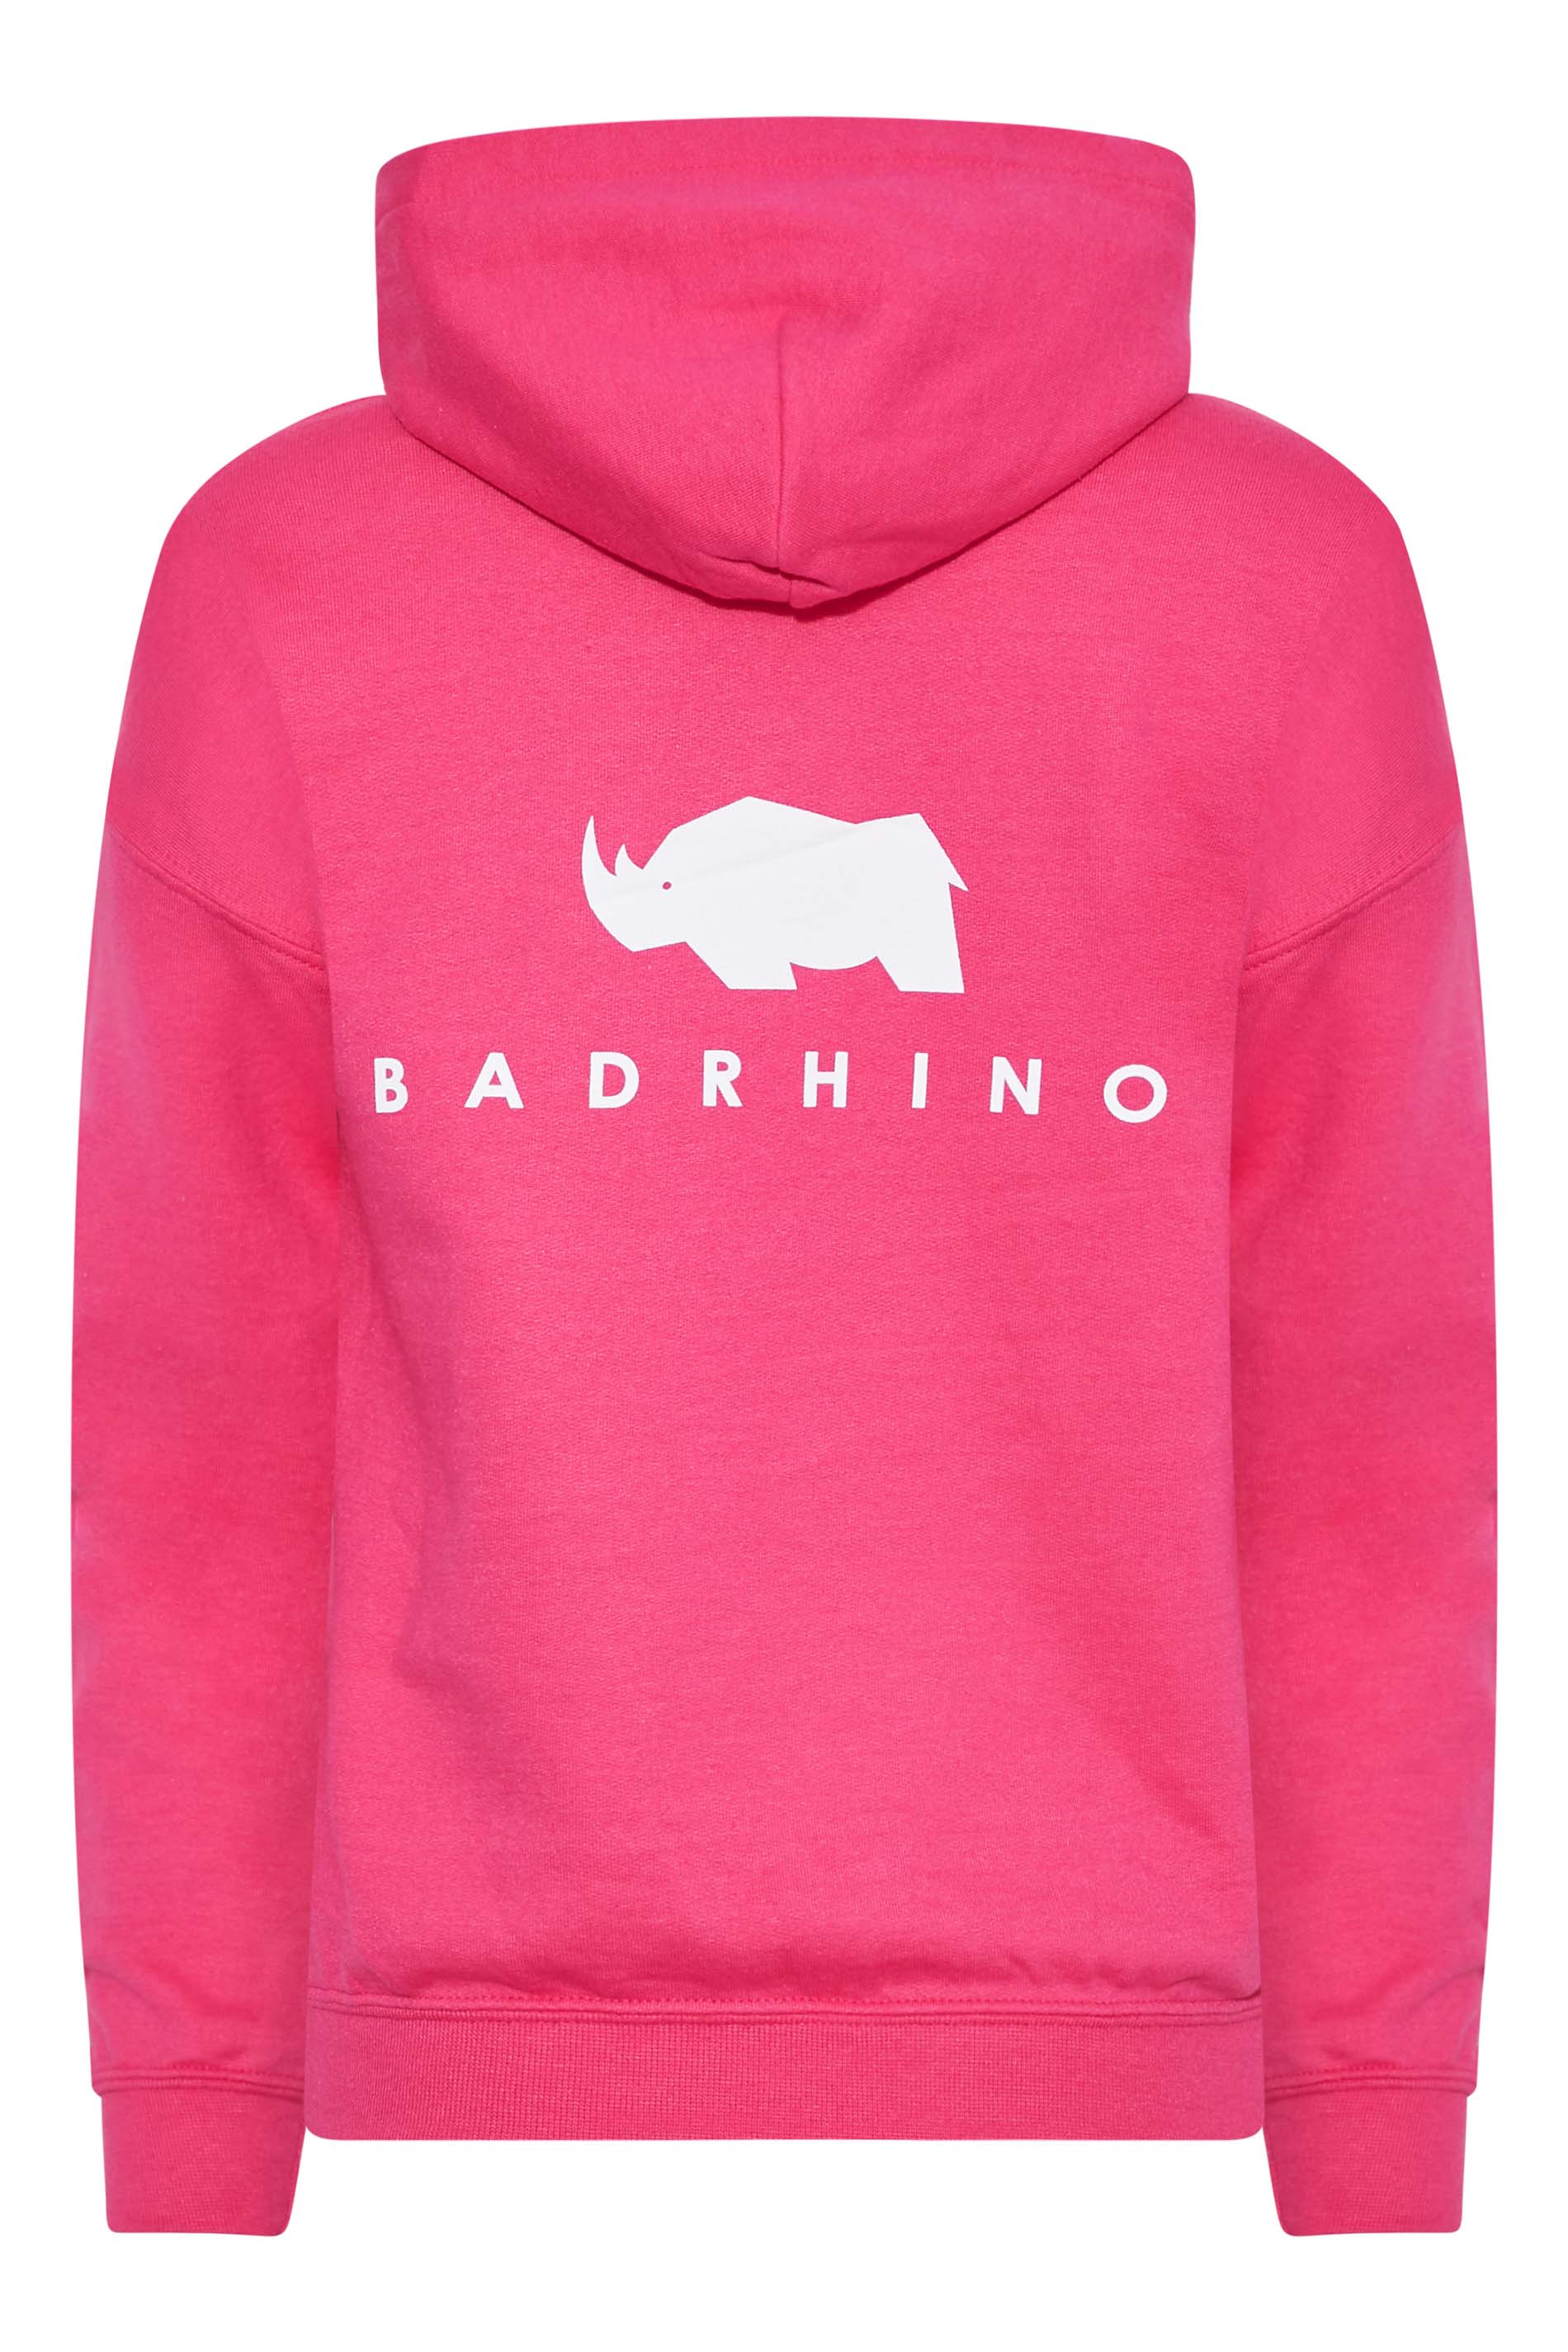 BadRhino Girls Pink Ultimate Strongman Hoodie | BadRhino 2